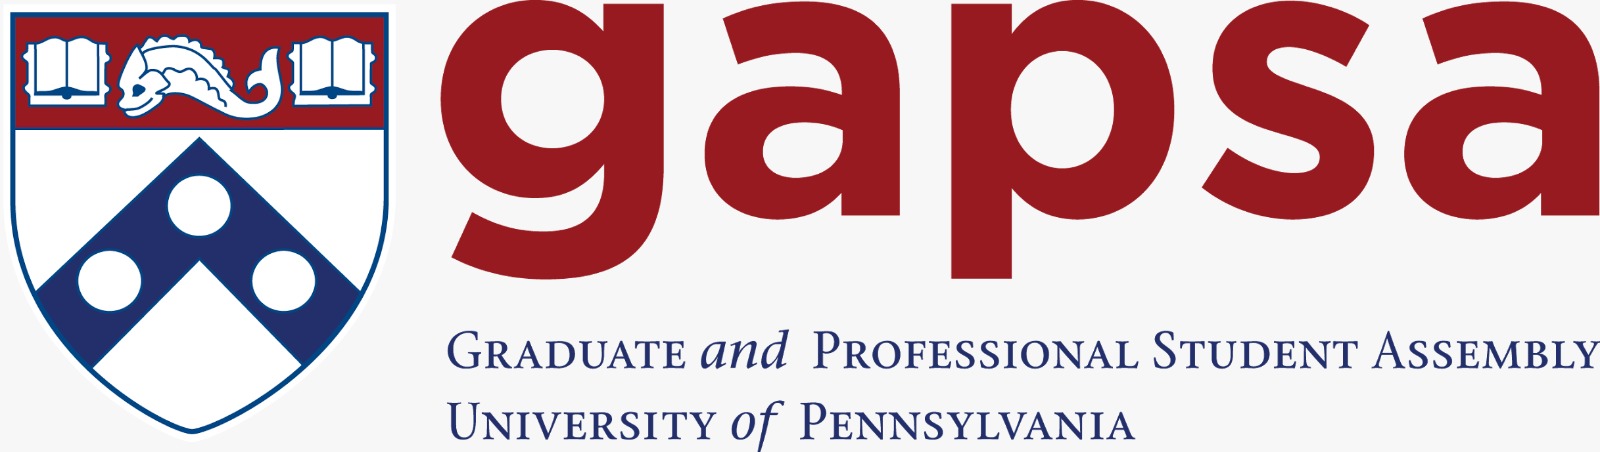 Graduate And Professional Student Association (GAPSA)